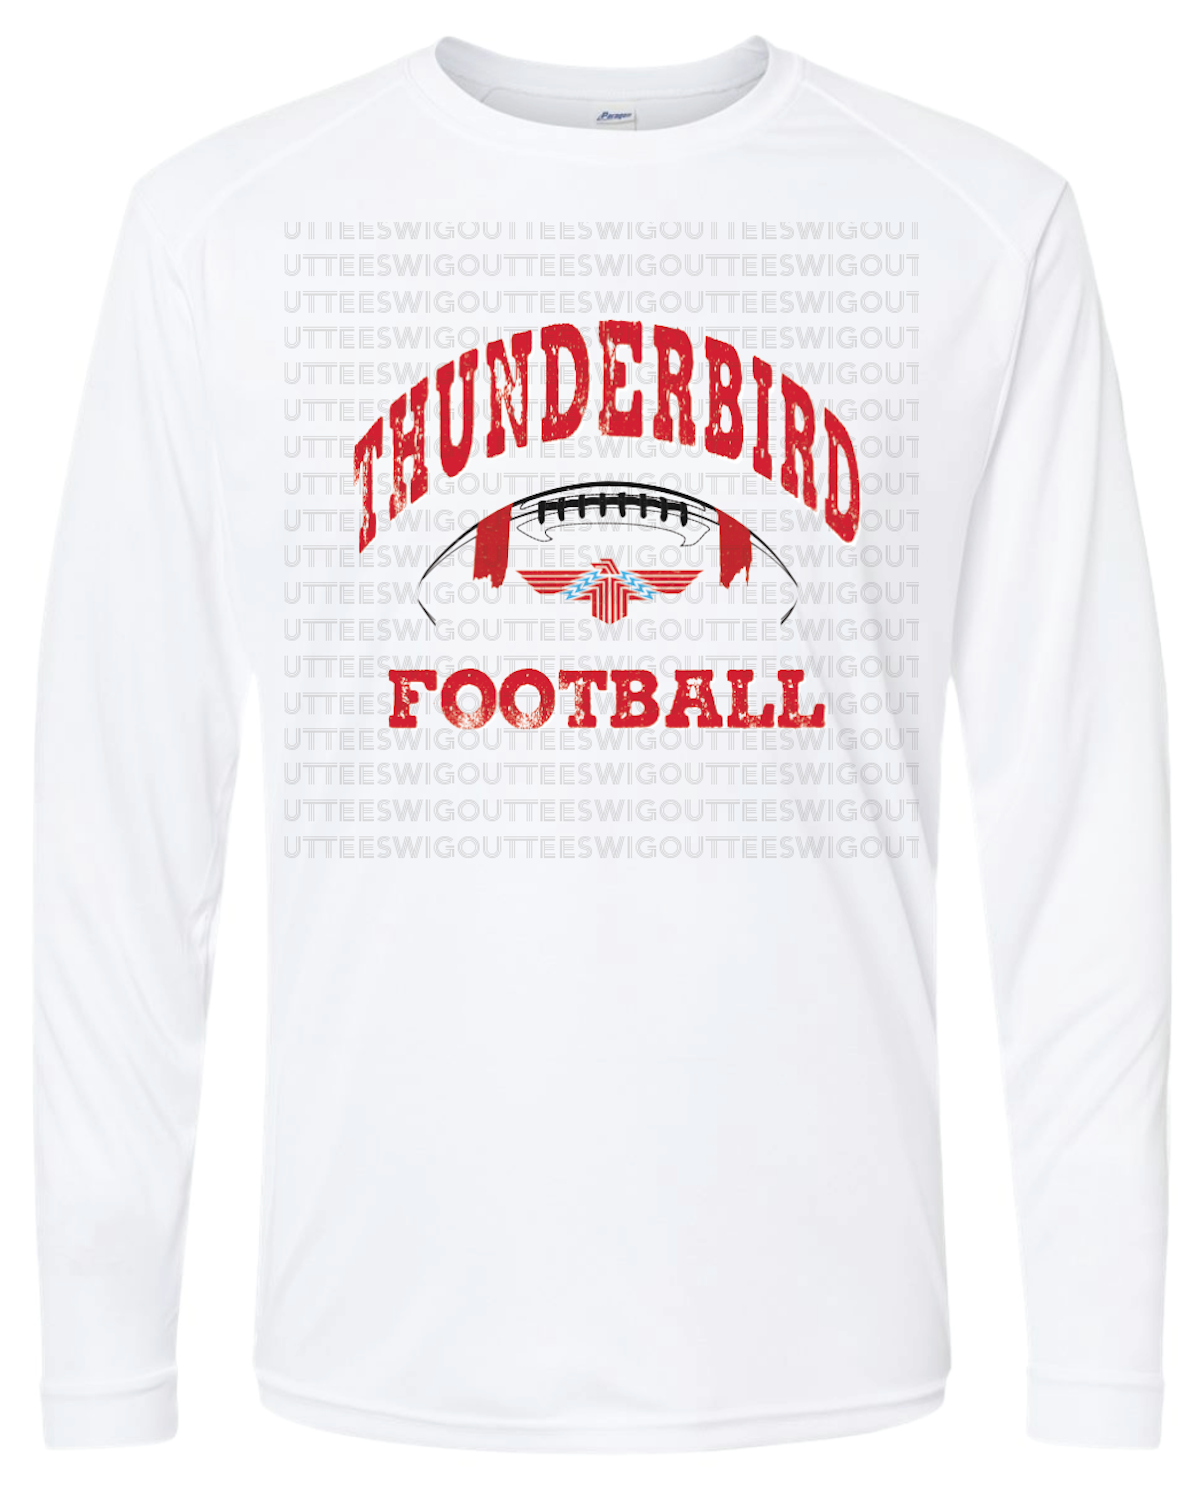 Thunderbird Football Paragon Performance Long Sleeve T-shirt